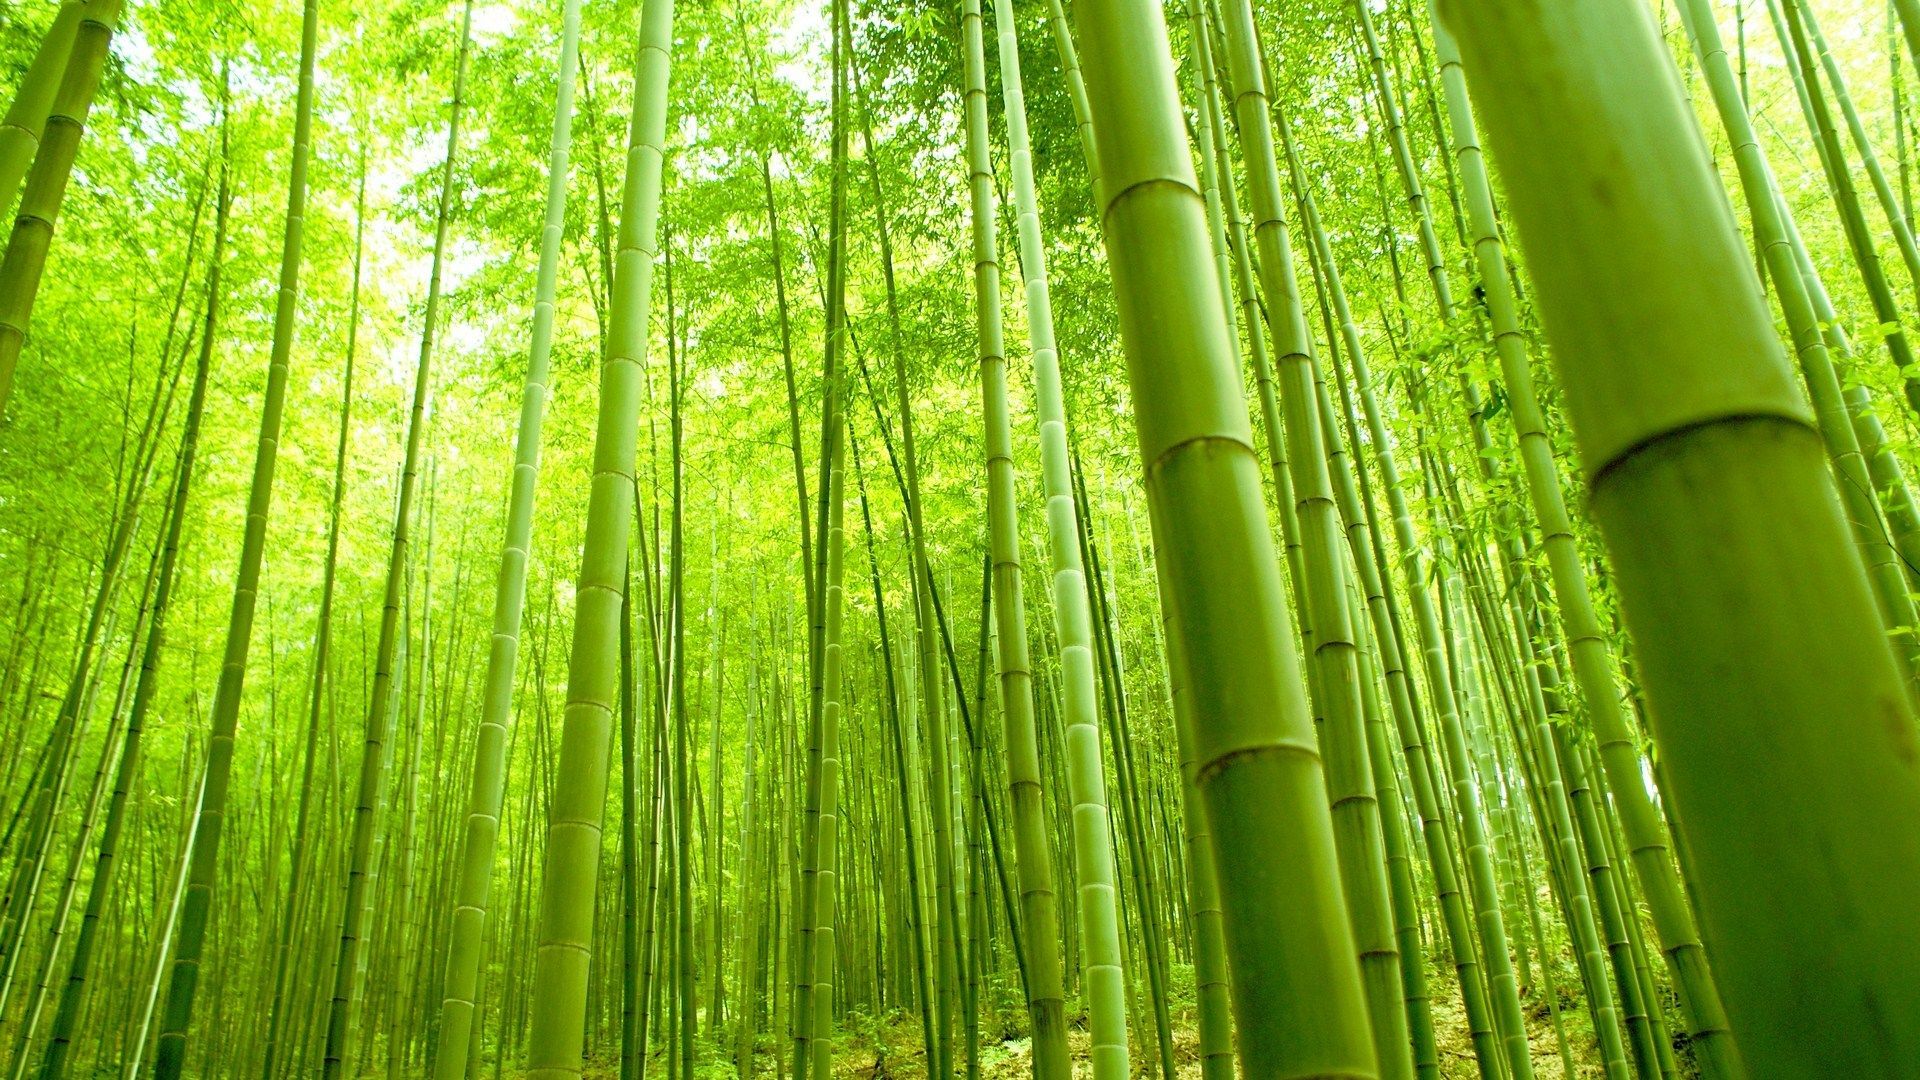 Bamboo Wallpaper - Non-Woven Wallpaper Premium - Bamboo Trees - Photo Wallpaper  Bamboo Wide Non-Woven Wallpaper Wall Mural Photo 3D Photo Wallpaper, Size H  x W: 190 cm x 288 cm :